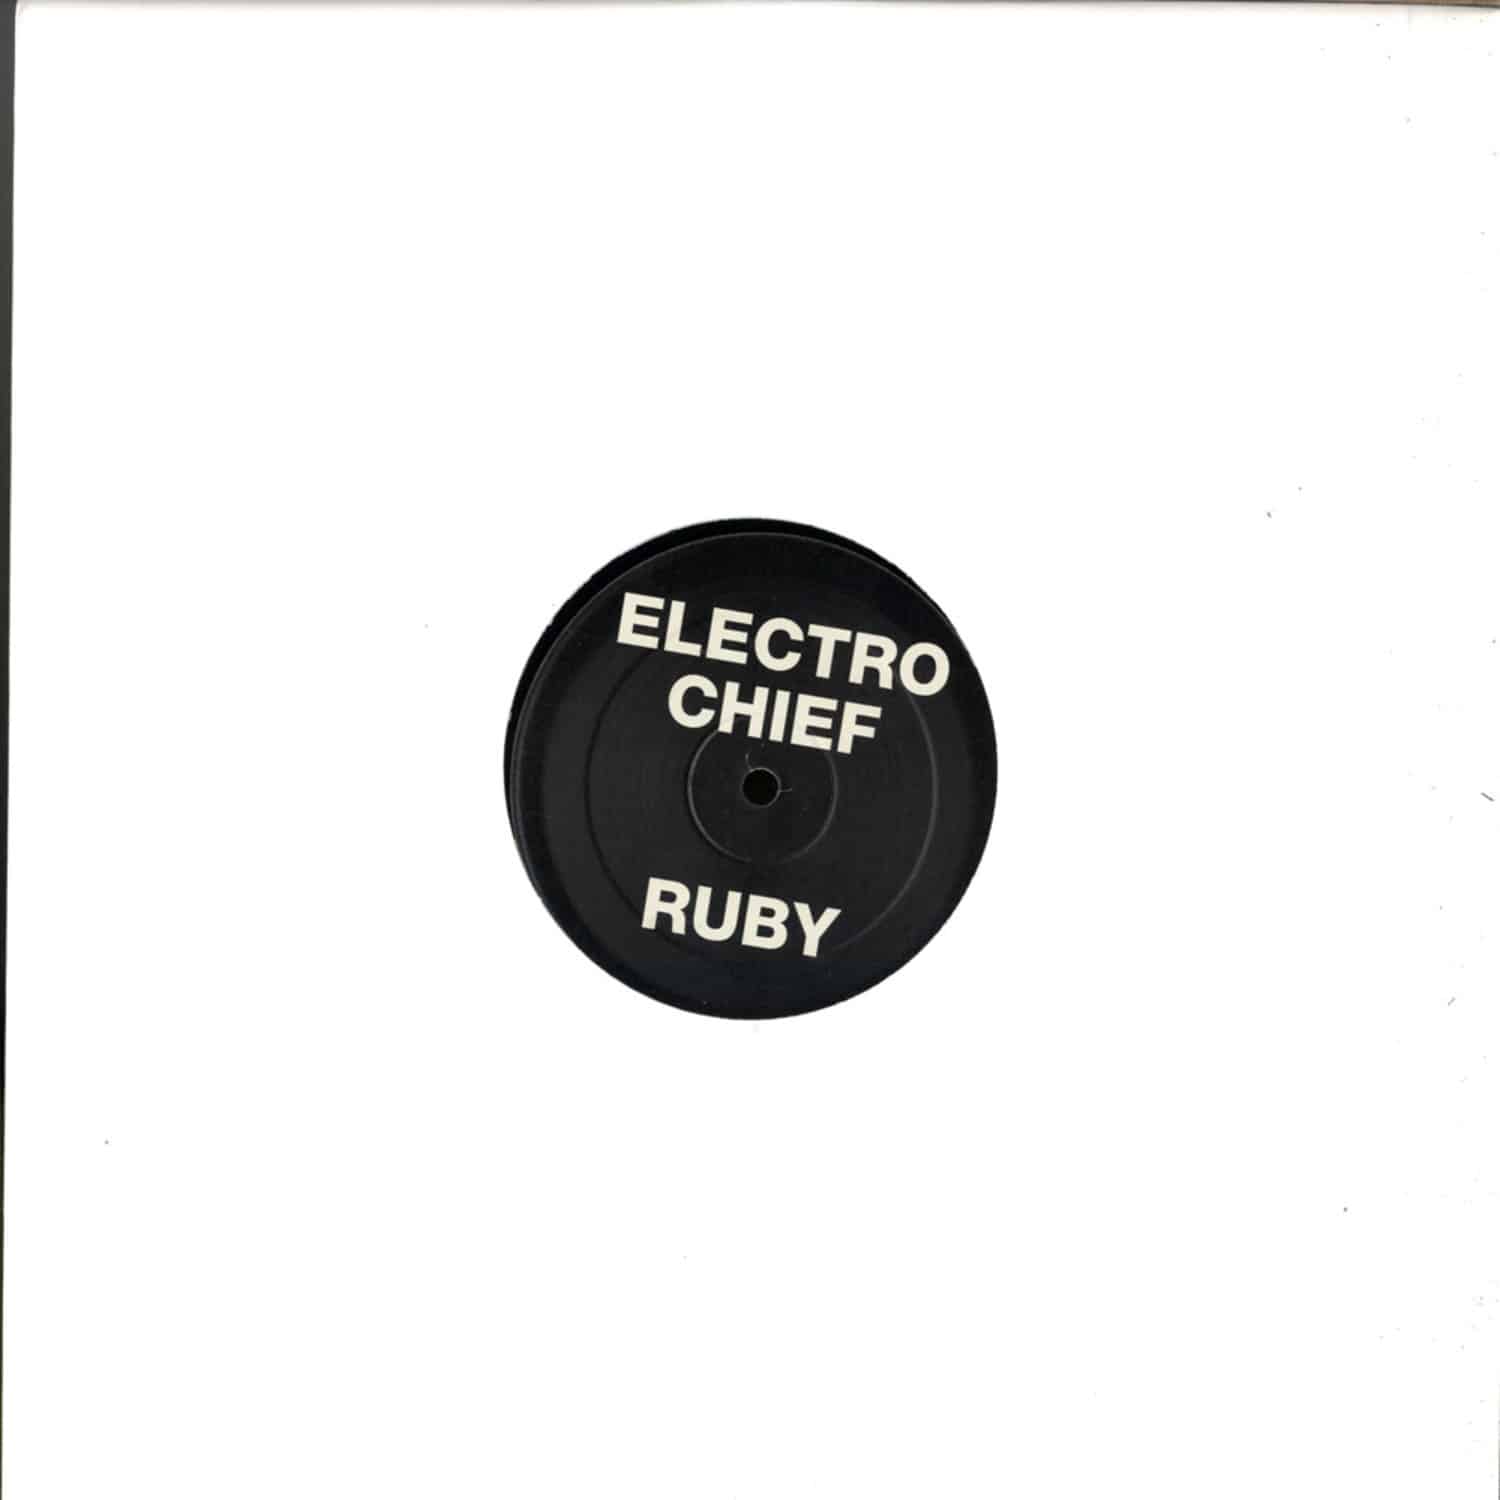 Electrochief - RUBY - KAISER CHIEF REMAKE